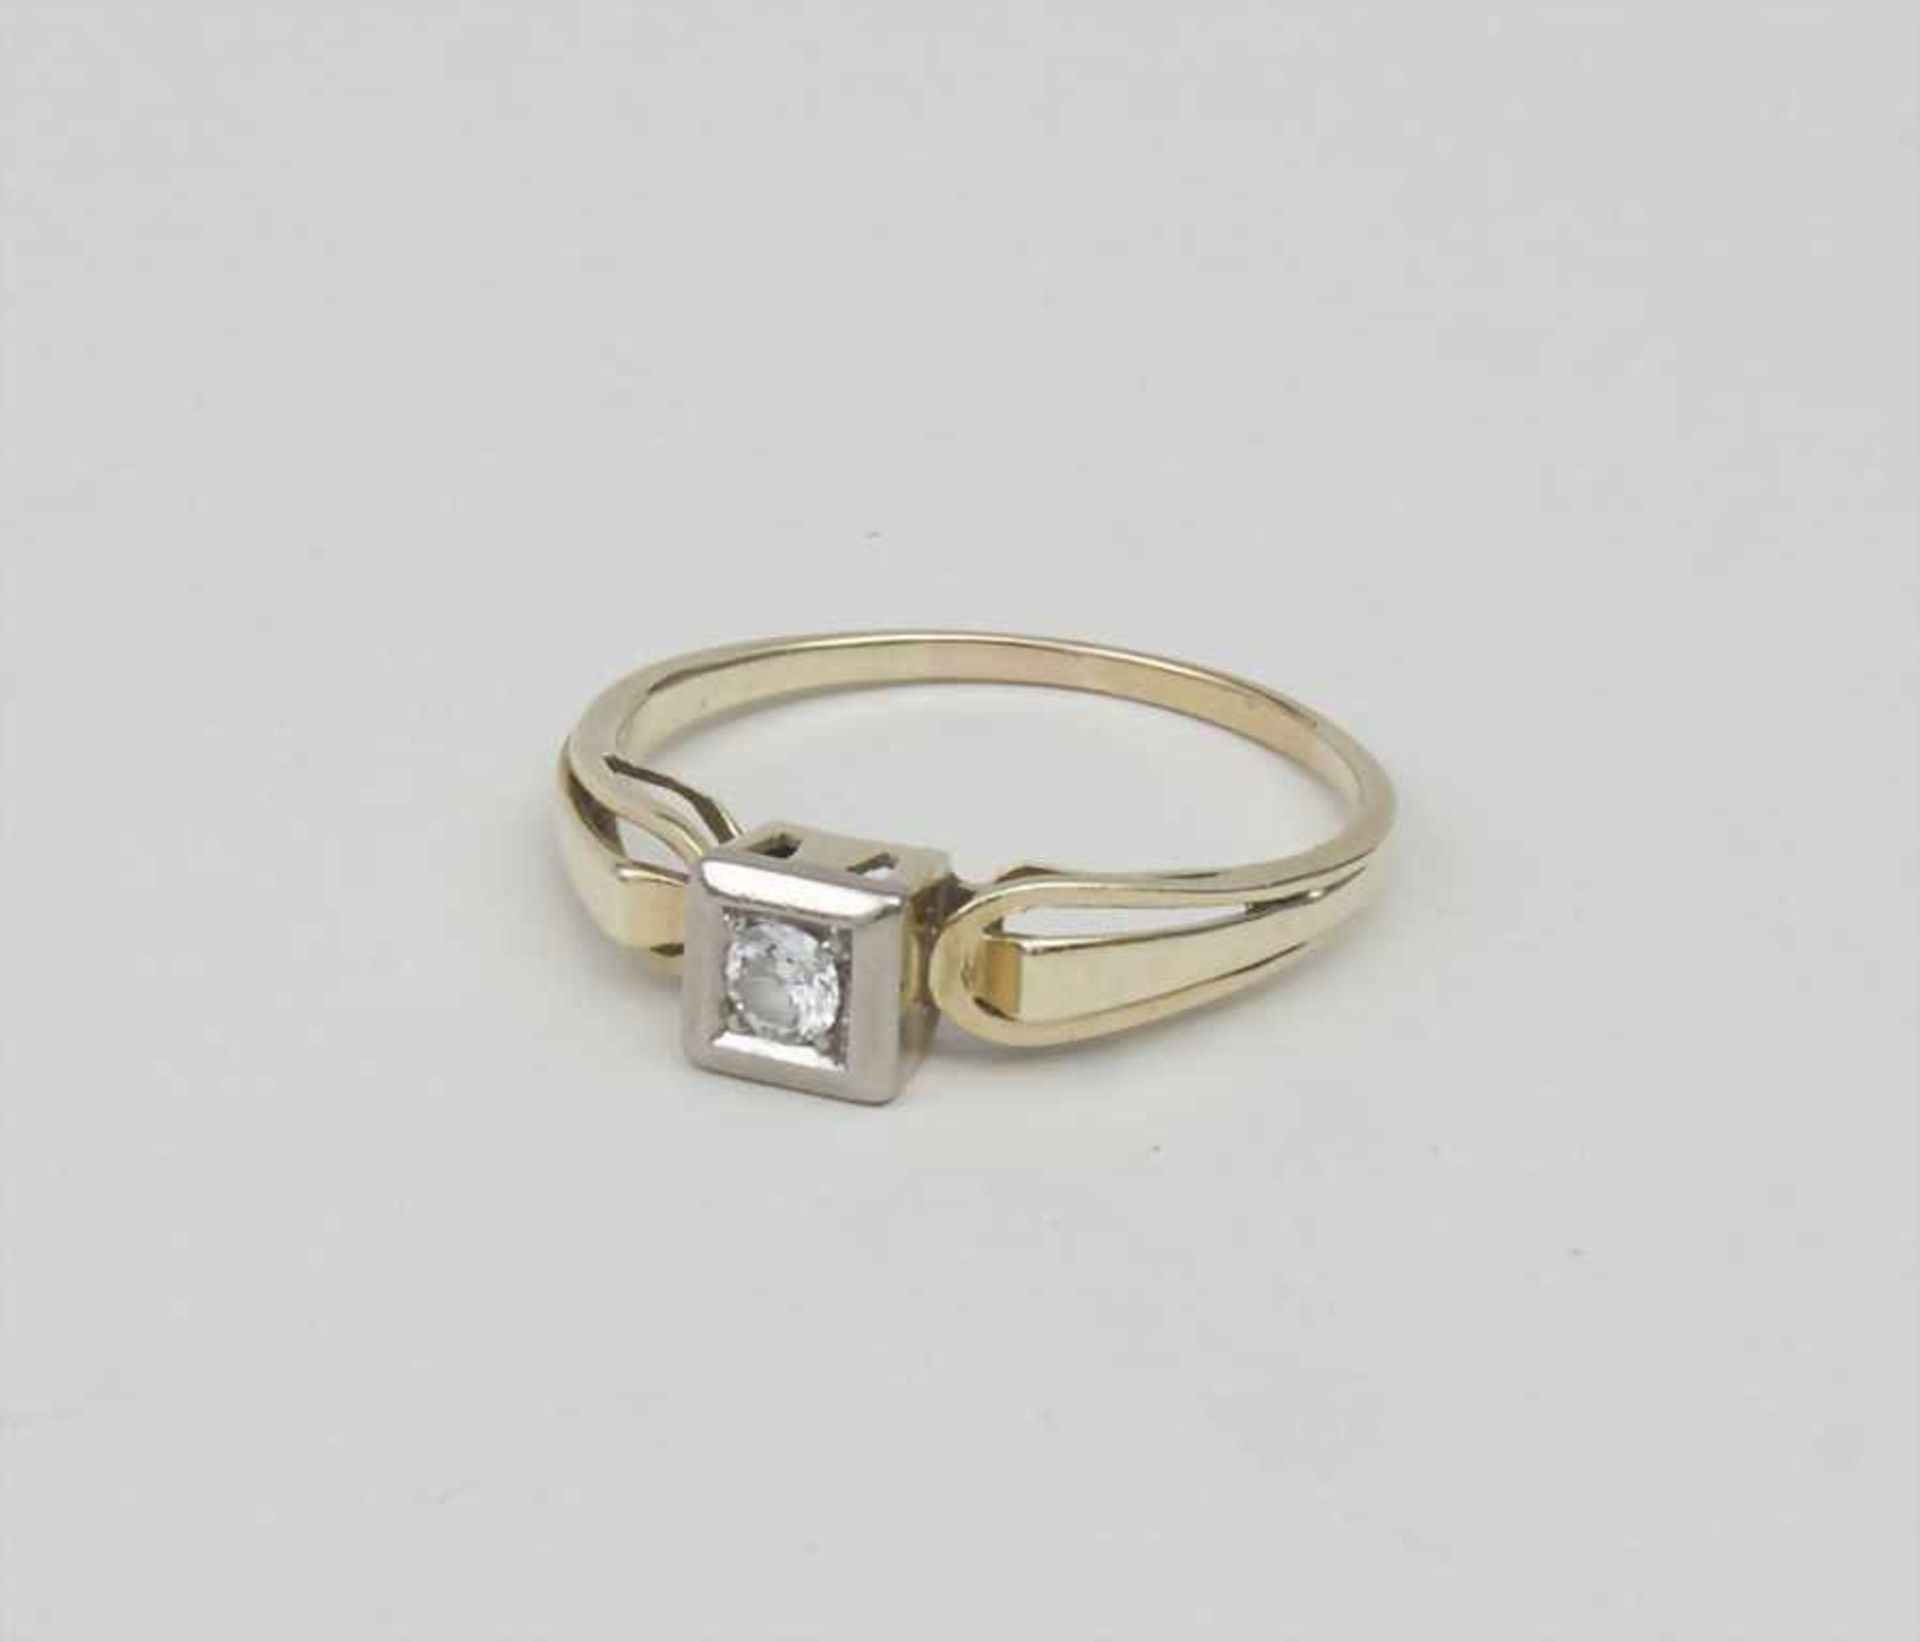 Herrenring mit Diamantsolitär / Man's Ring with Solitaire Material: Gelbgold 585/000 14 Kt